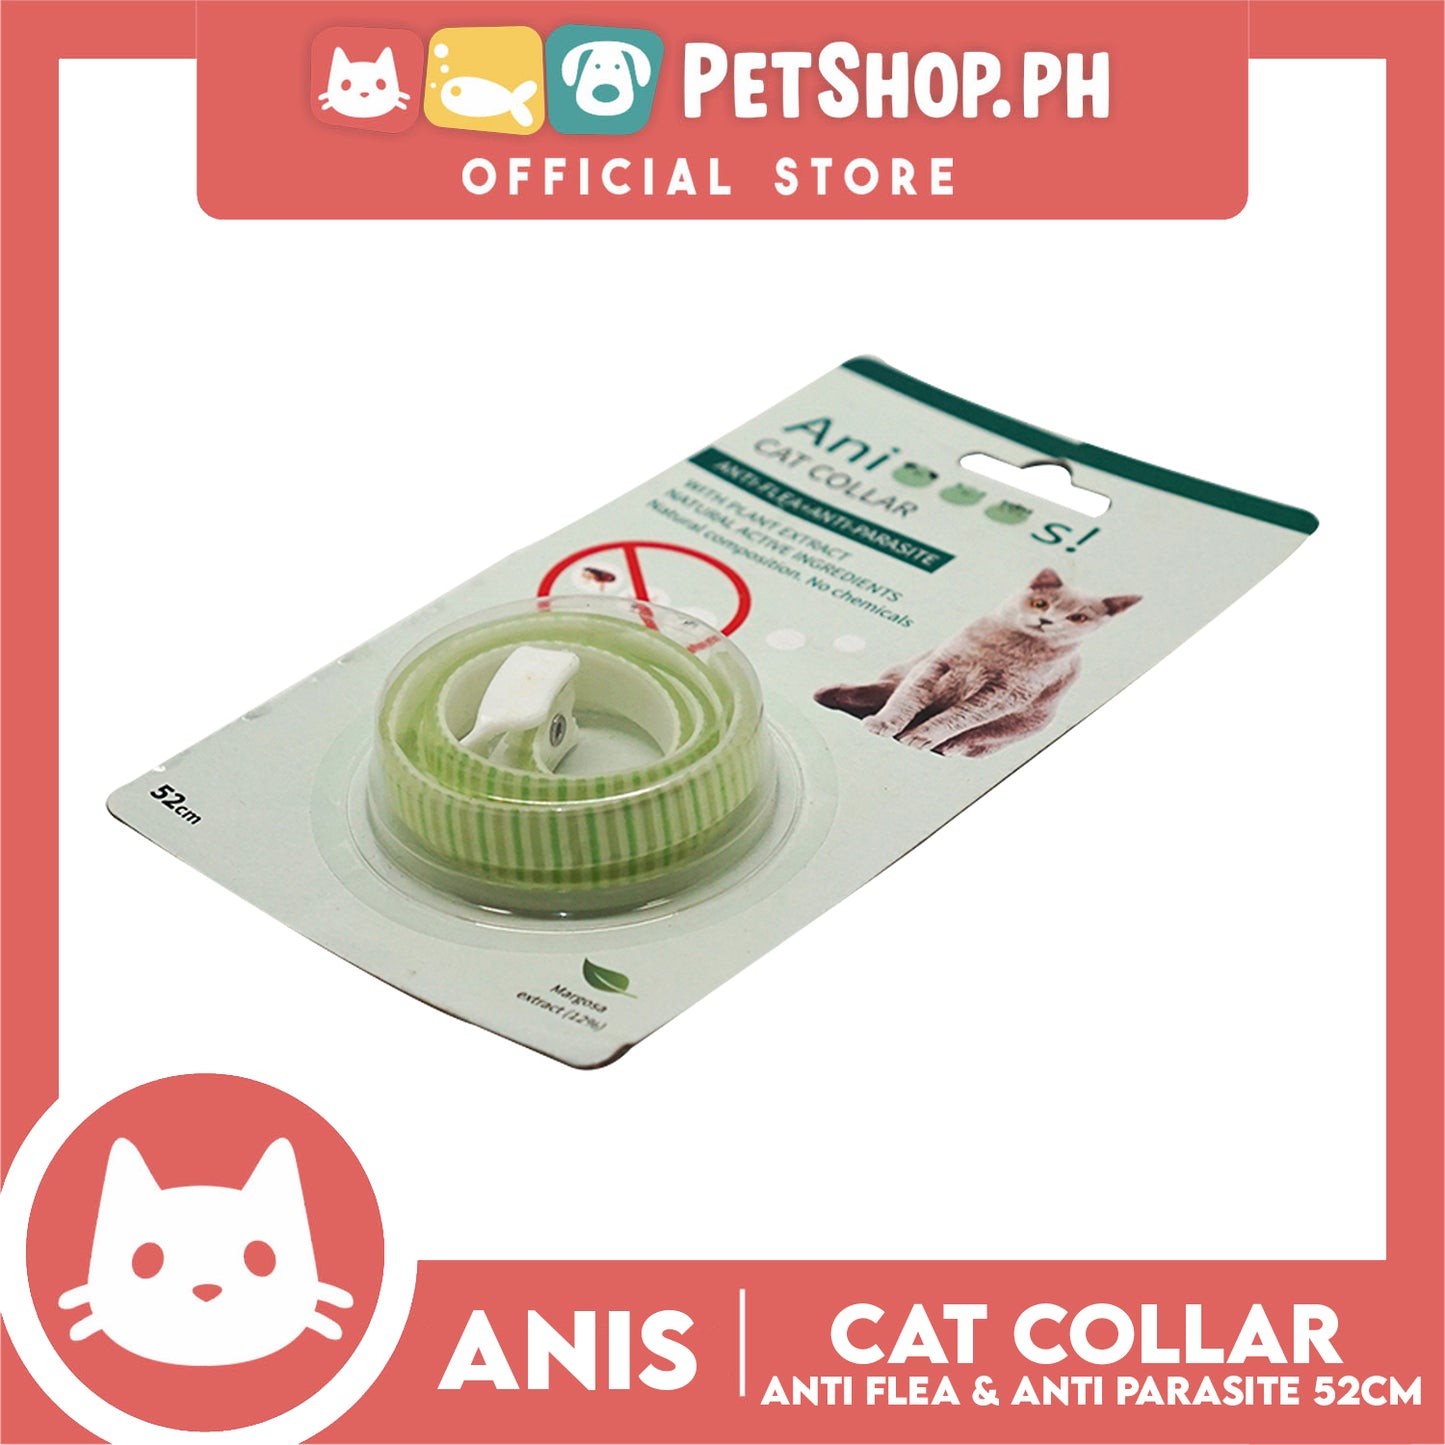 Adjustable Cat Collar Anti-Flea and Anti-Parasite 52cm with 12% Margosa Extract Flea C6713 (Mint)